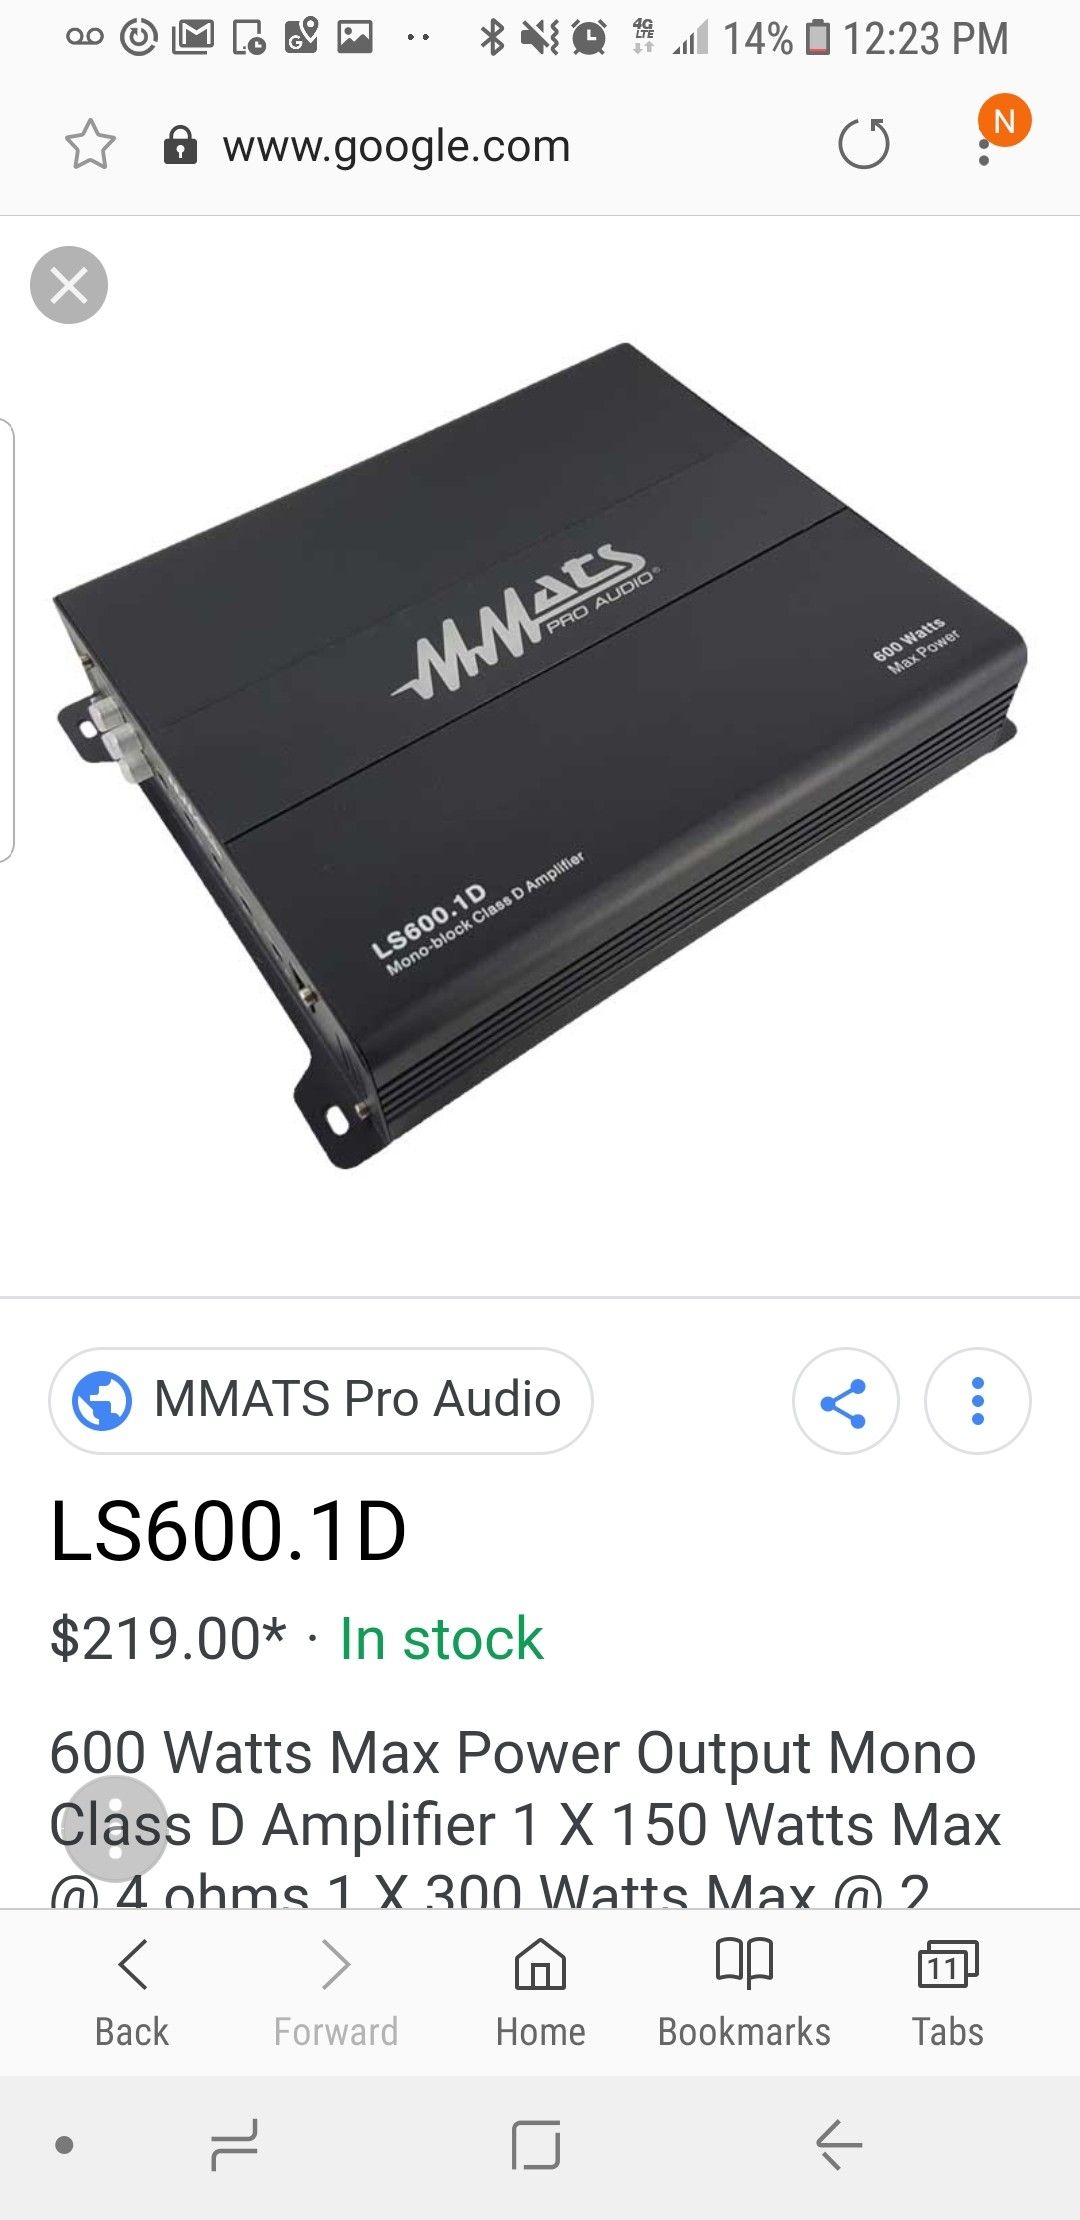 Mmats pro audio 600 watt 1 ohm amp! Powerful and runs 1 ohm consistent. I ran 2 Kicker CVR's